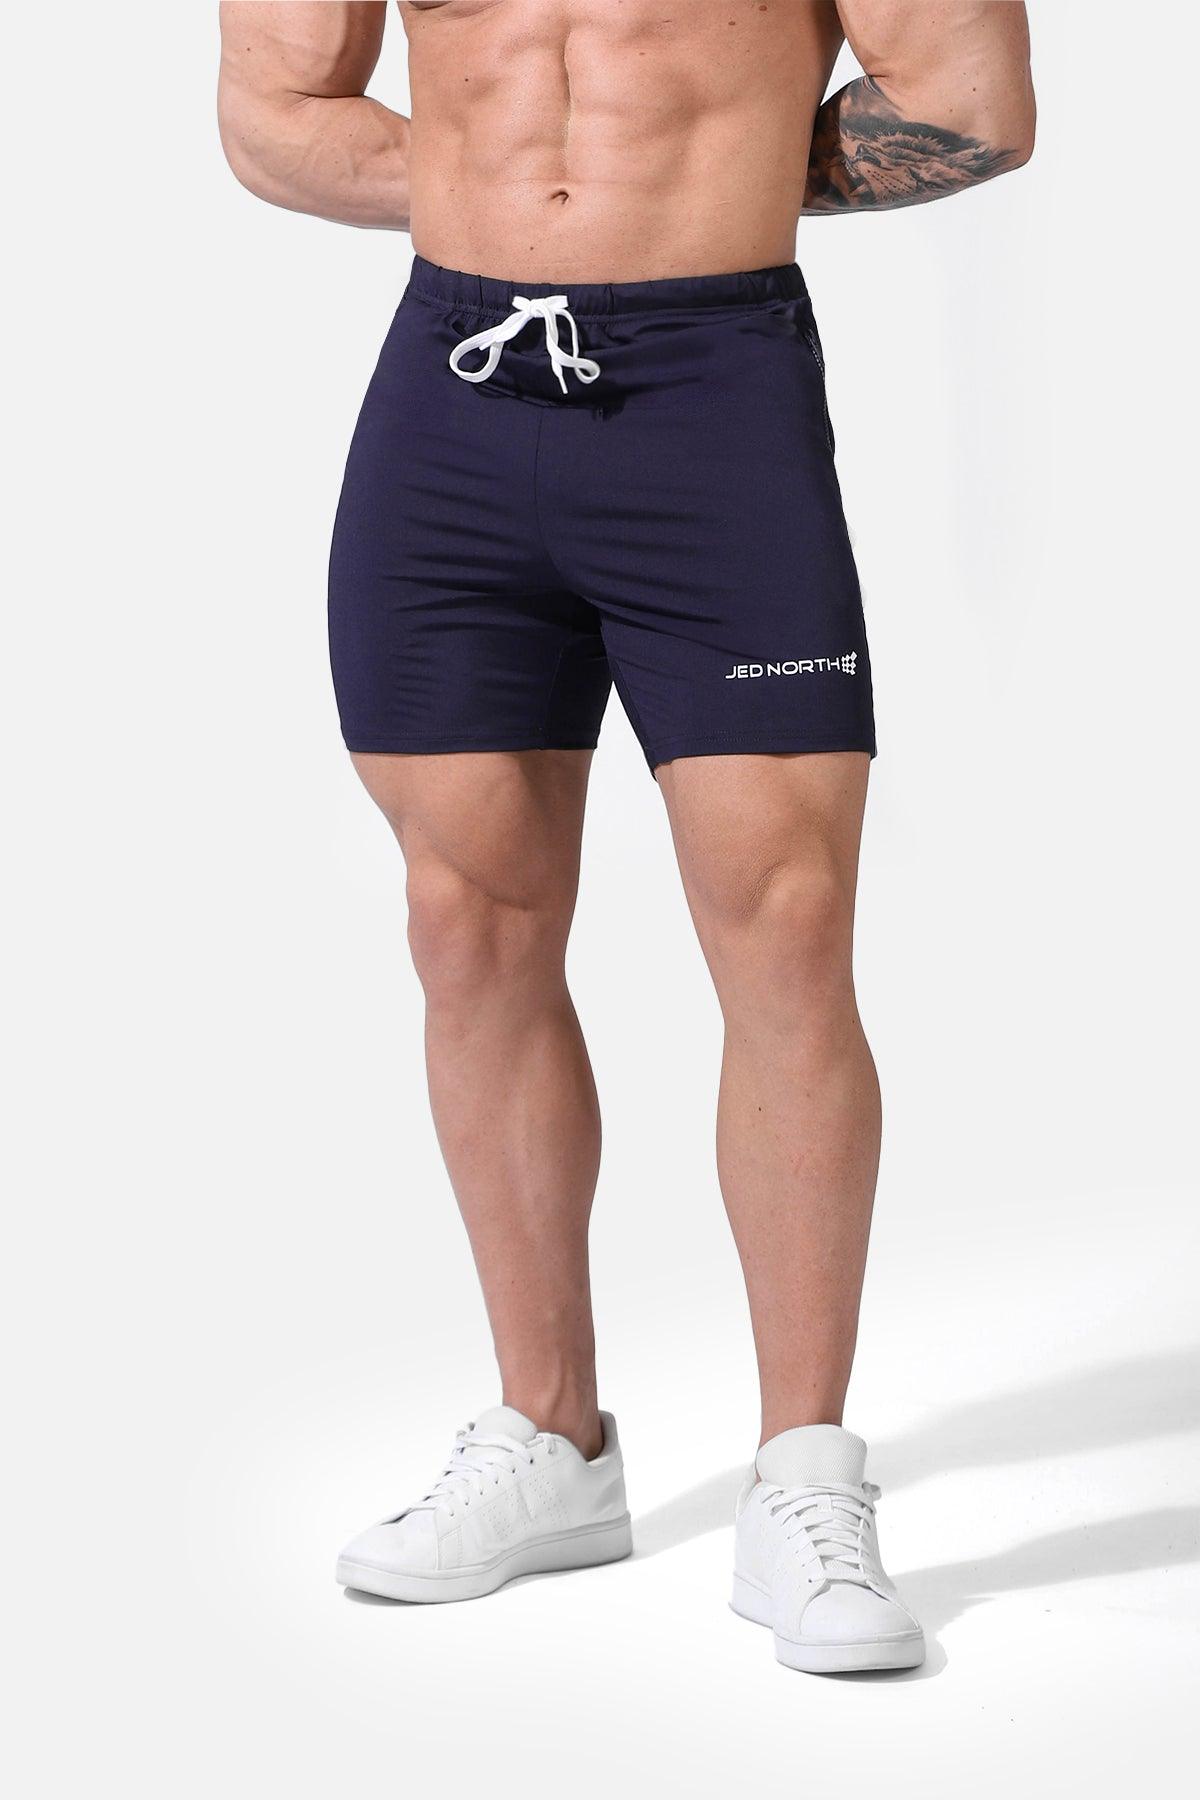 Agile Plus 5.5'' Bodybuilding Shorts w Zipper Pockets - Navy - Jed North Canada